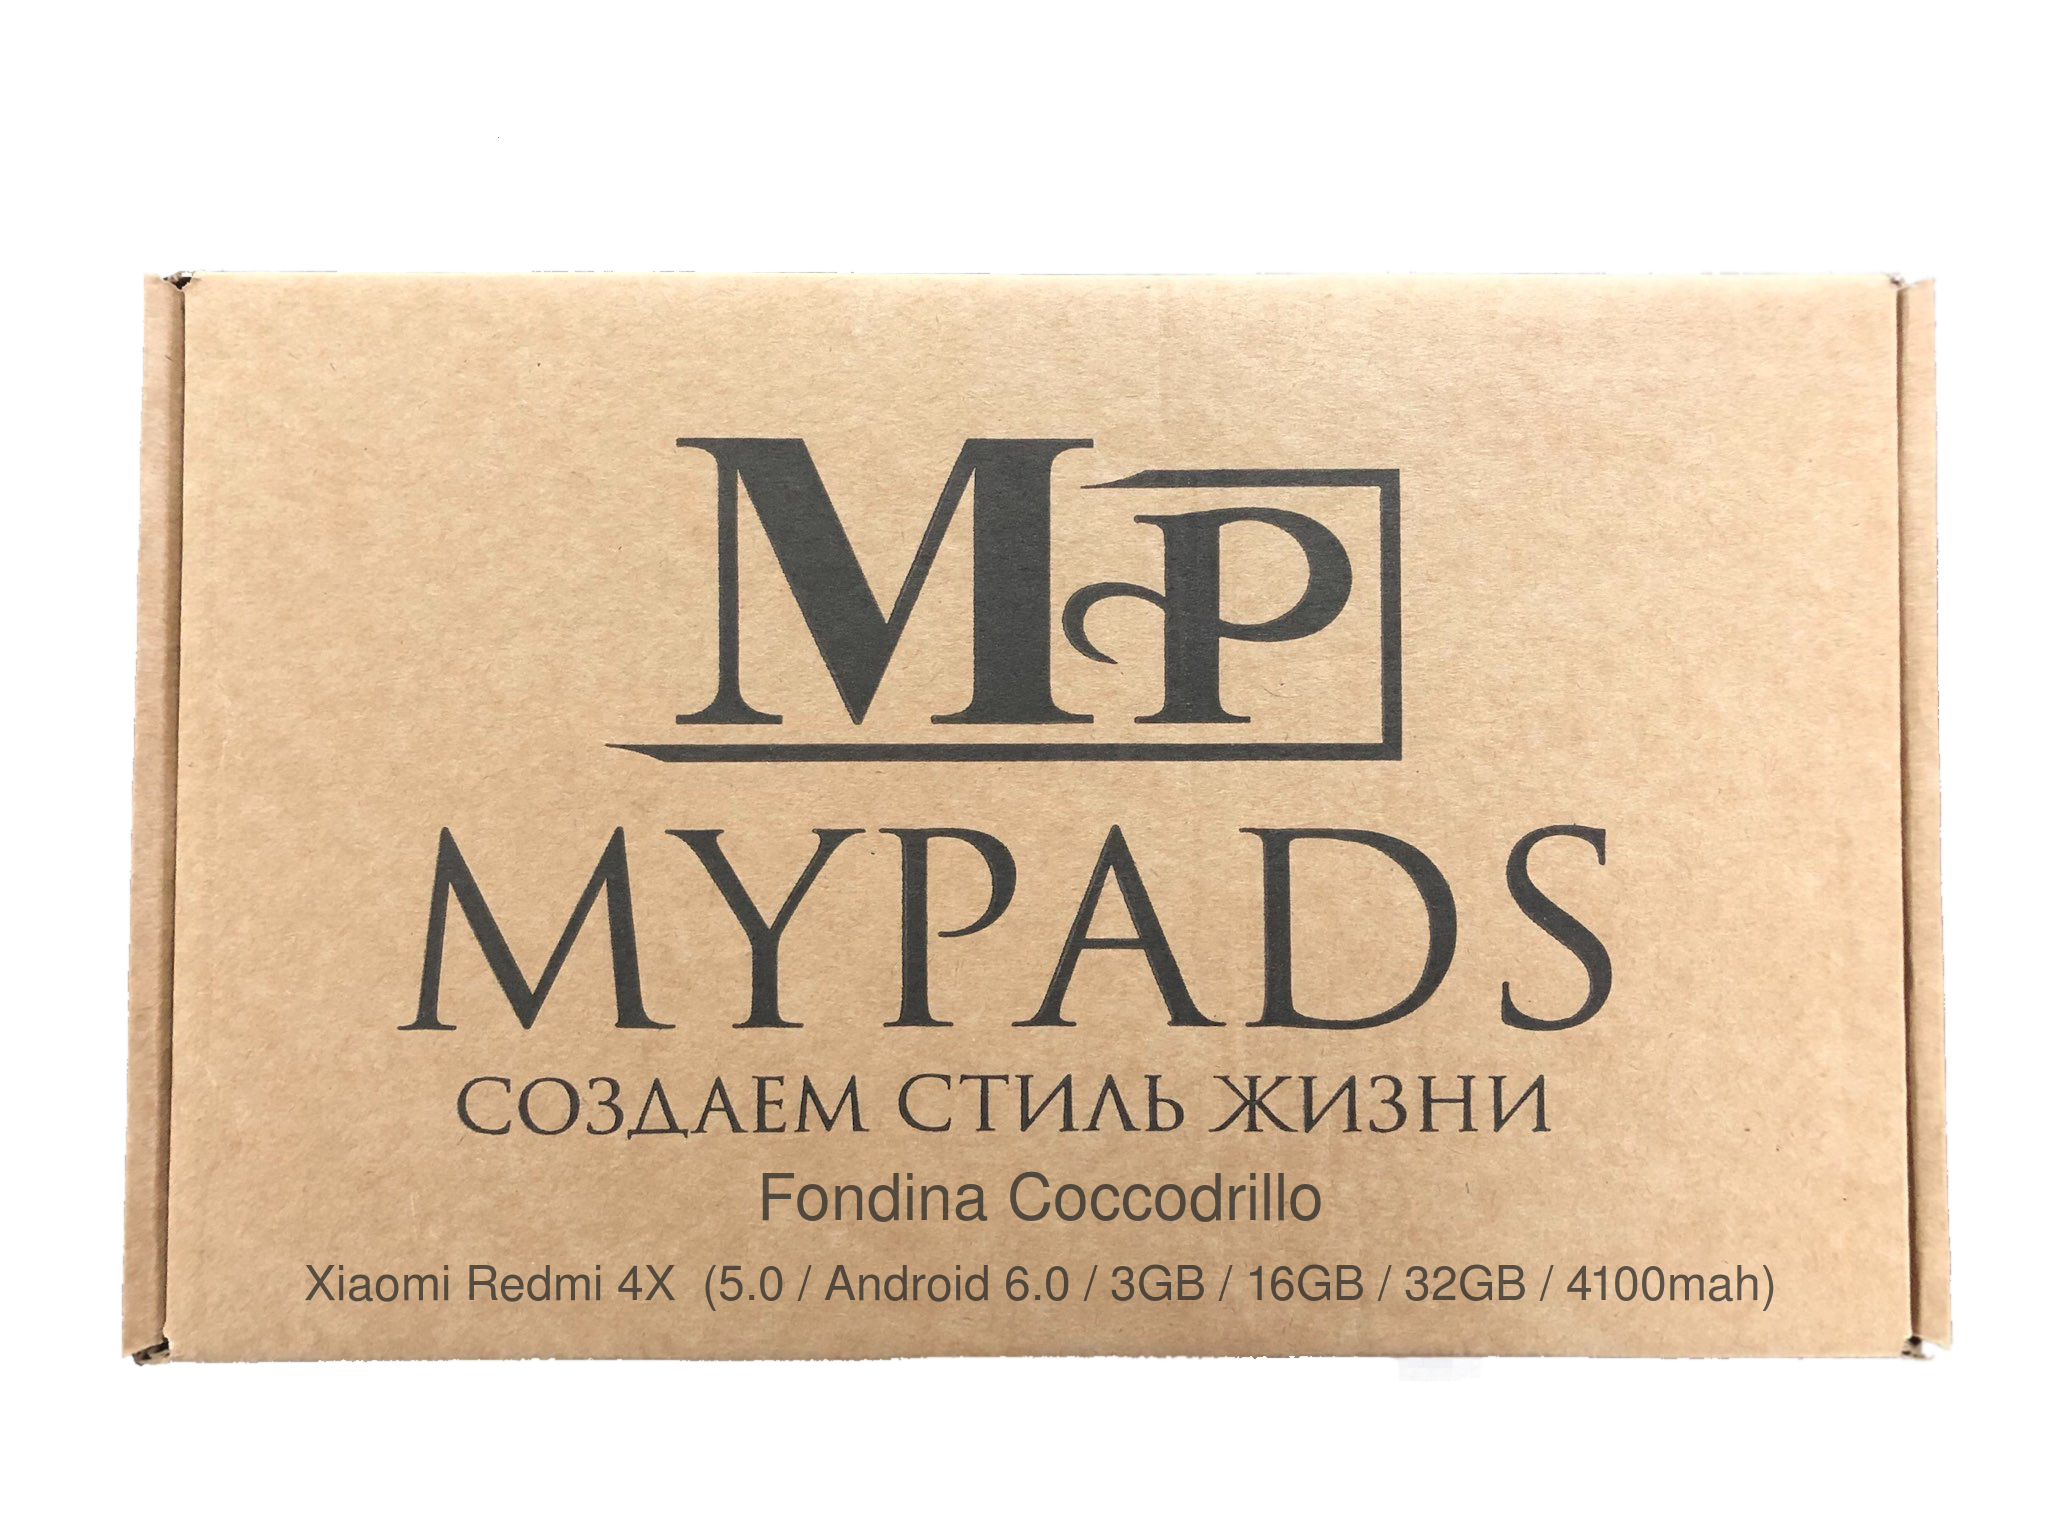 Чехол MyPads Fondina Coccodrillo для Xiaomi Redmi 4X (5.0 / Android 6.0 / 3GB / 16GB / 32GB / 4100mah)